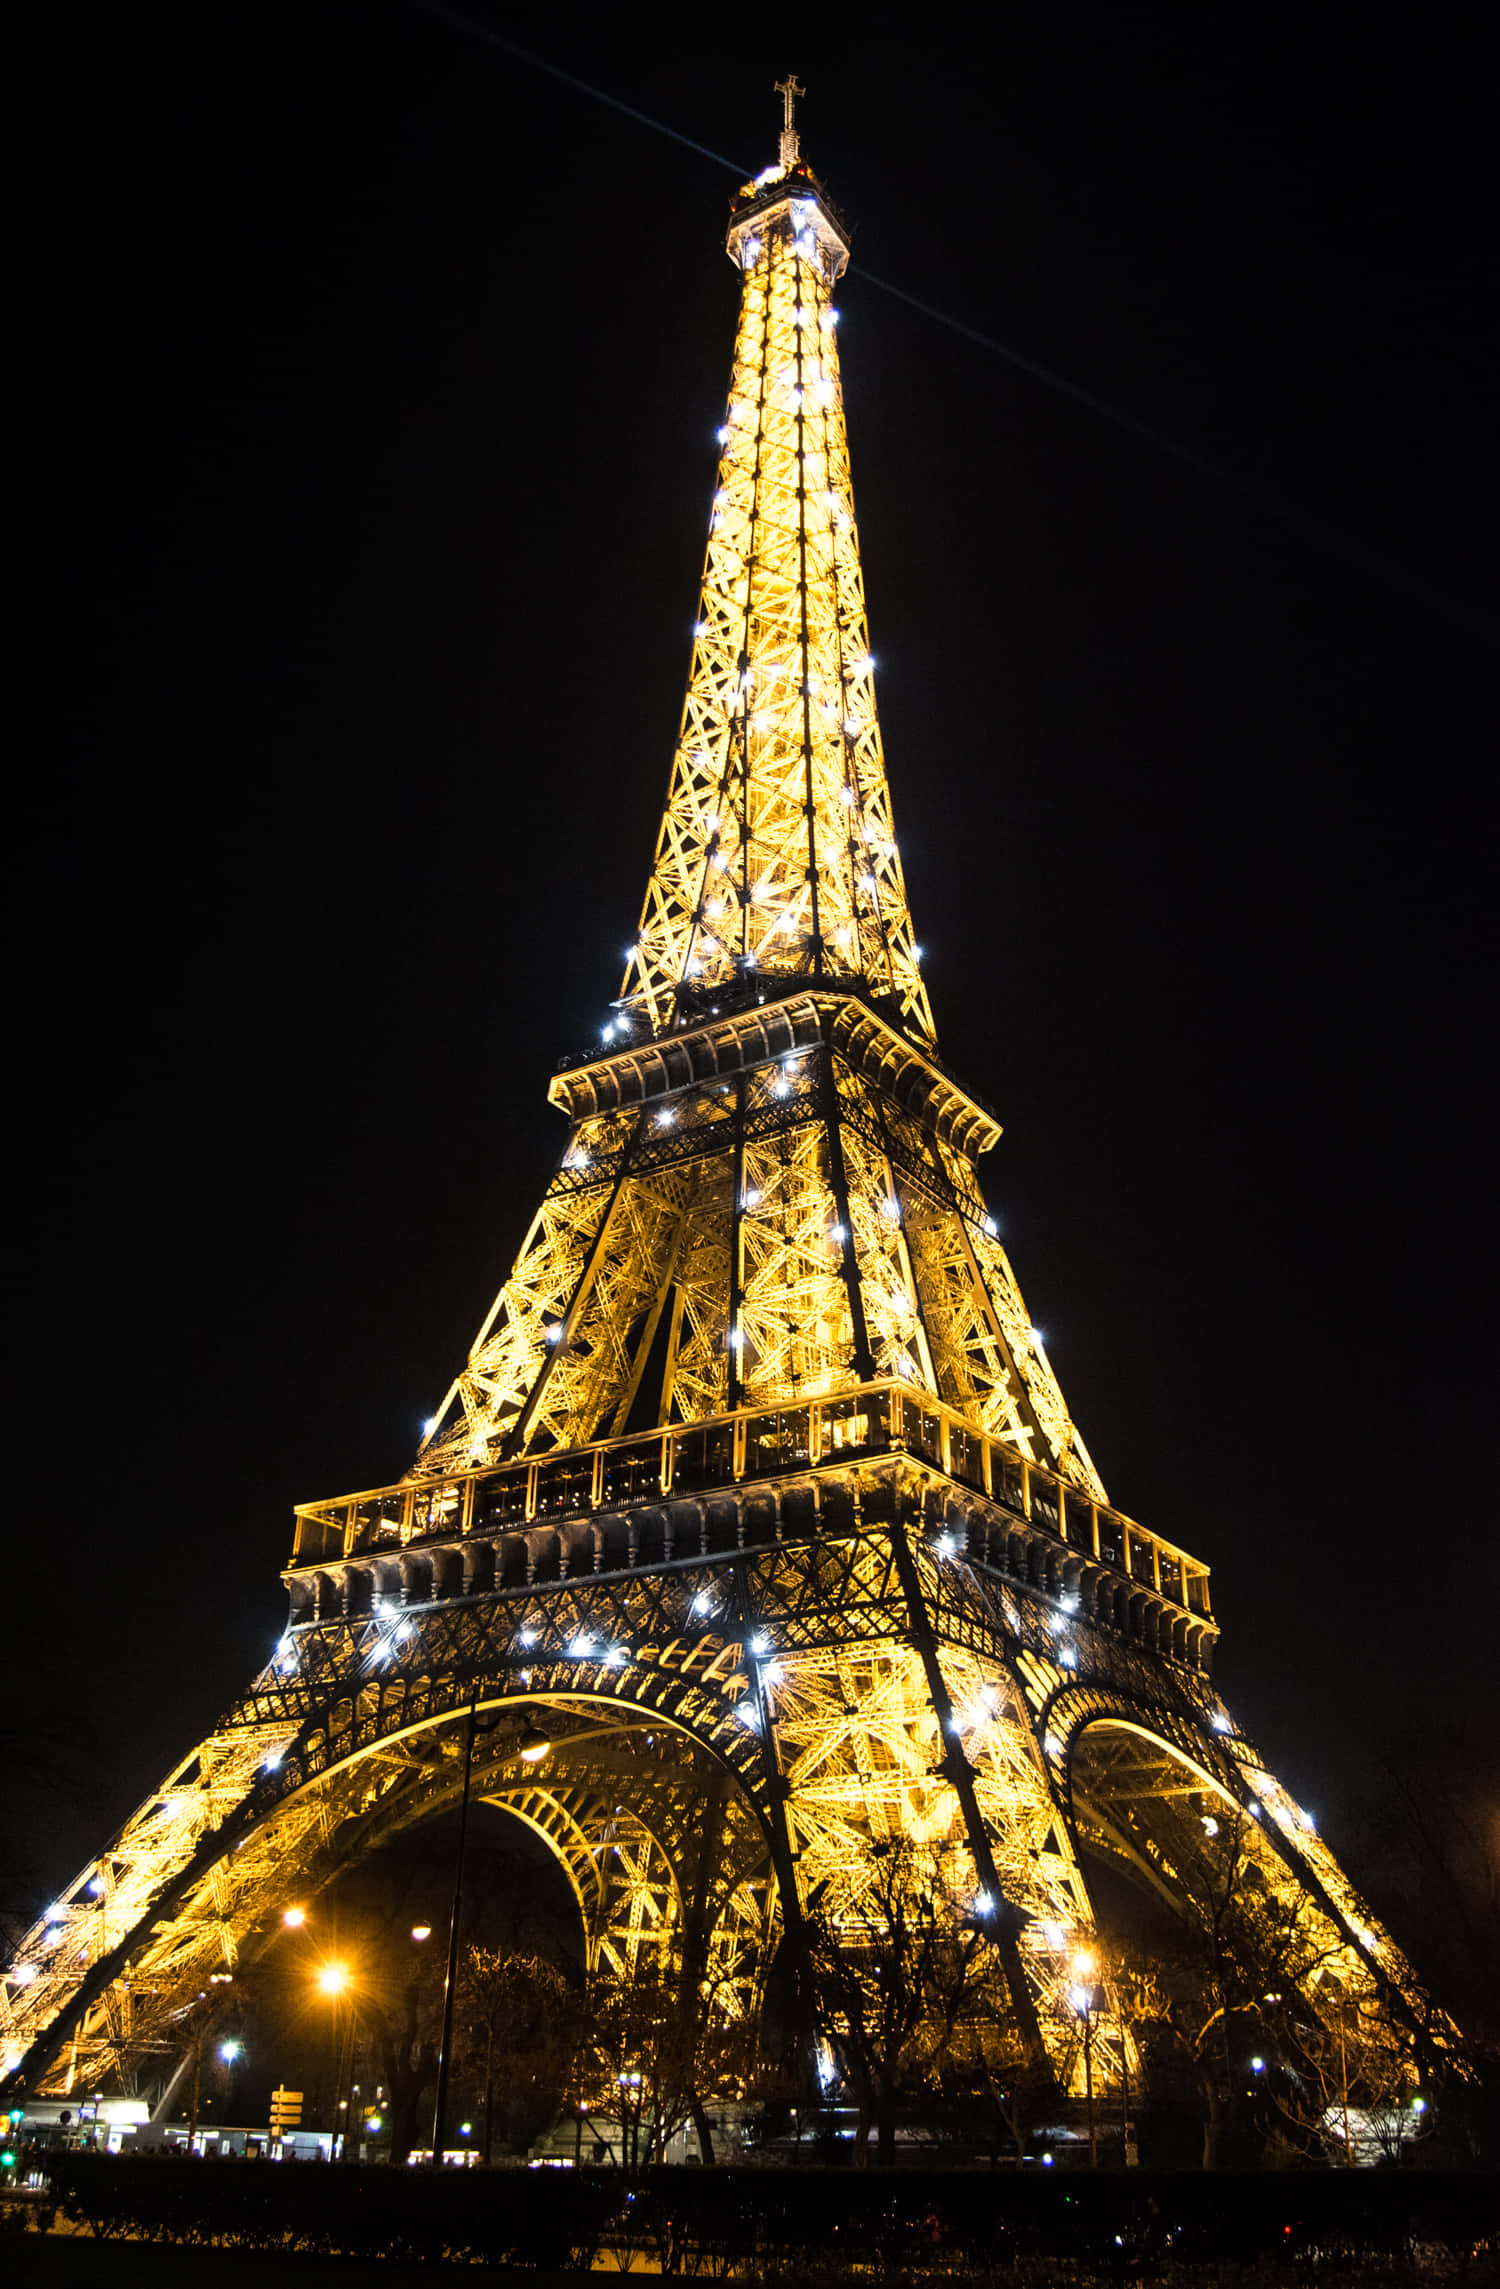 Illuminated Eiffel Tower Against the Night Sky